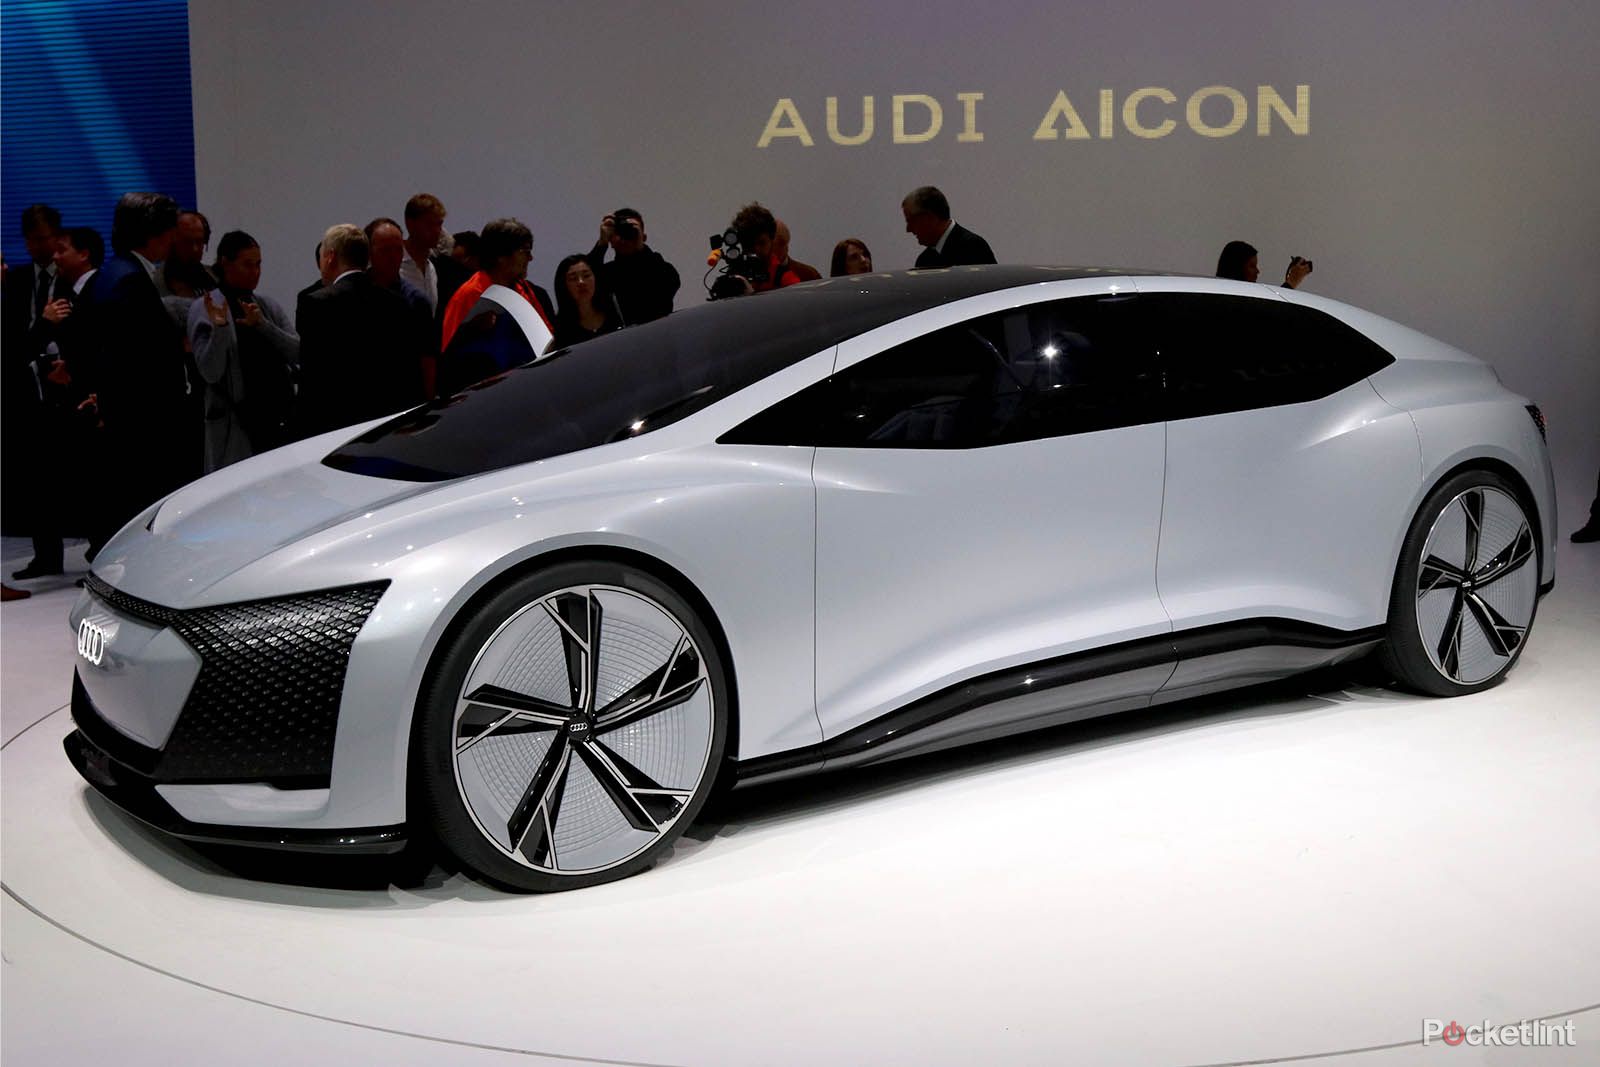 Audi Aicon concept in pictures image 2